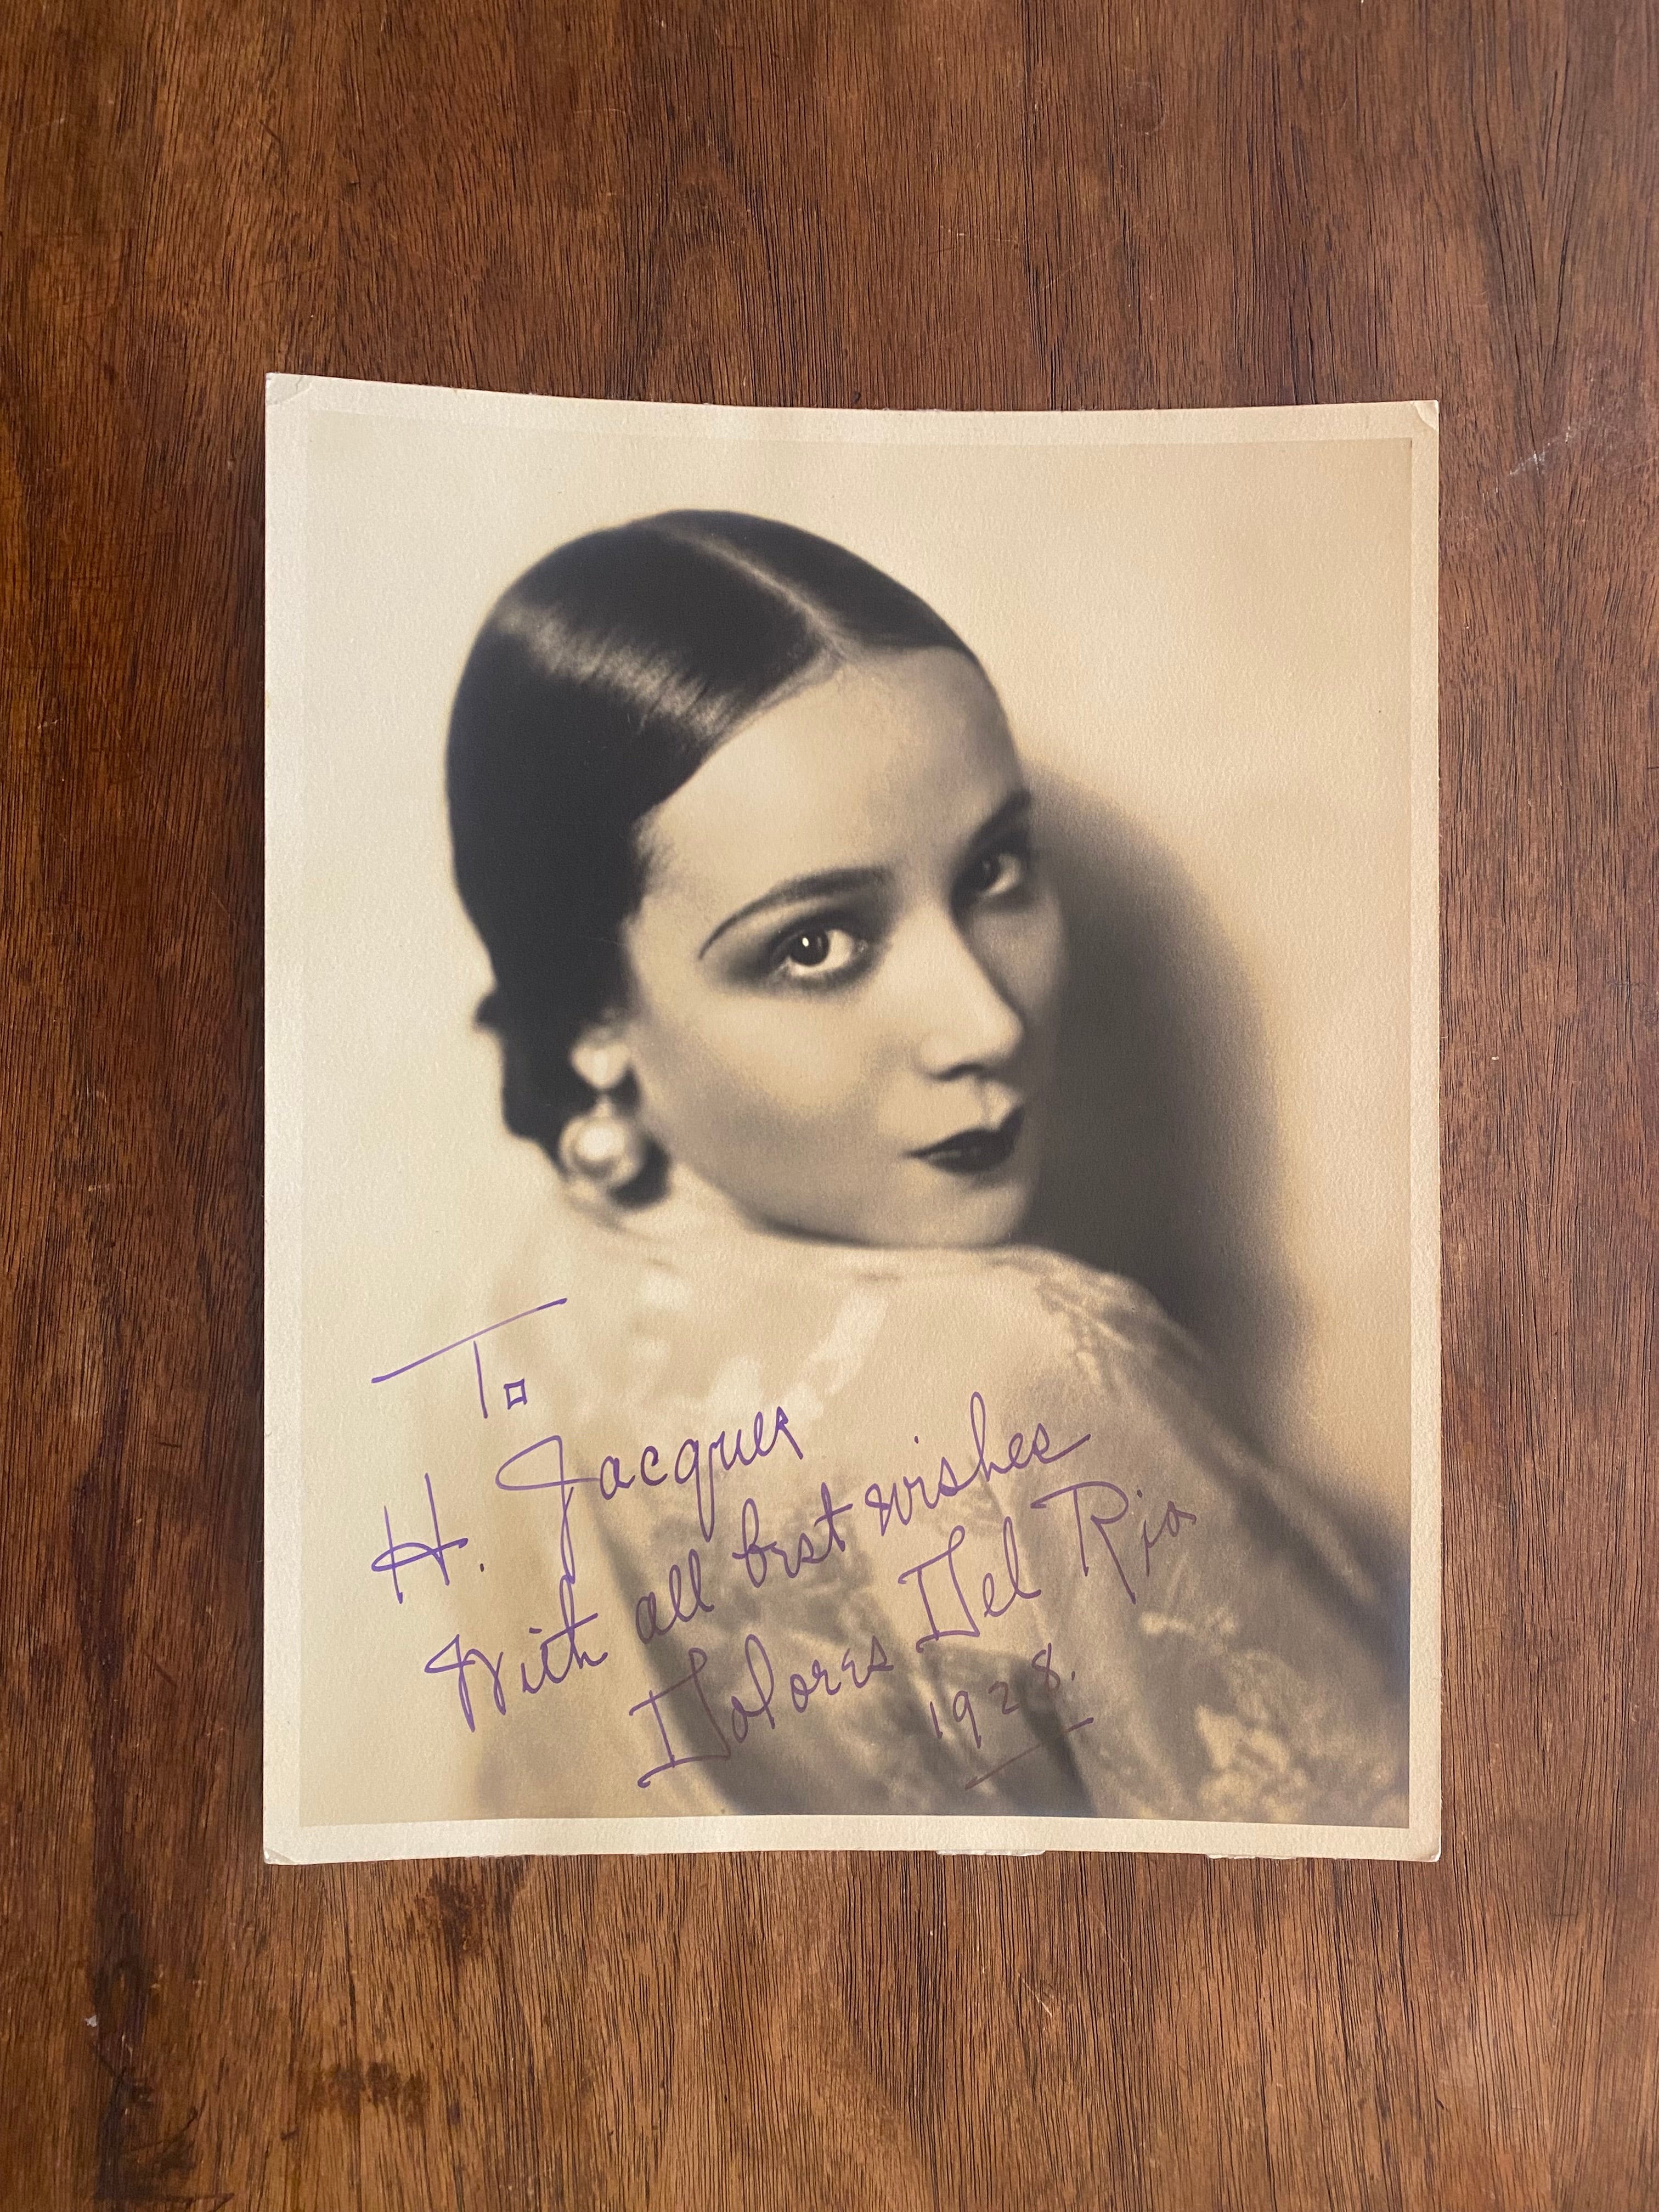 Dolores Del Rio.  Beautiful, vintage, sepia photo dated 1928.